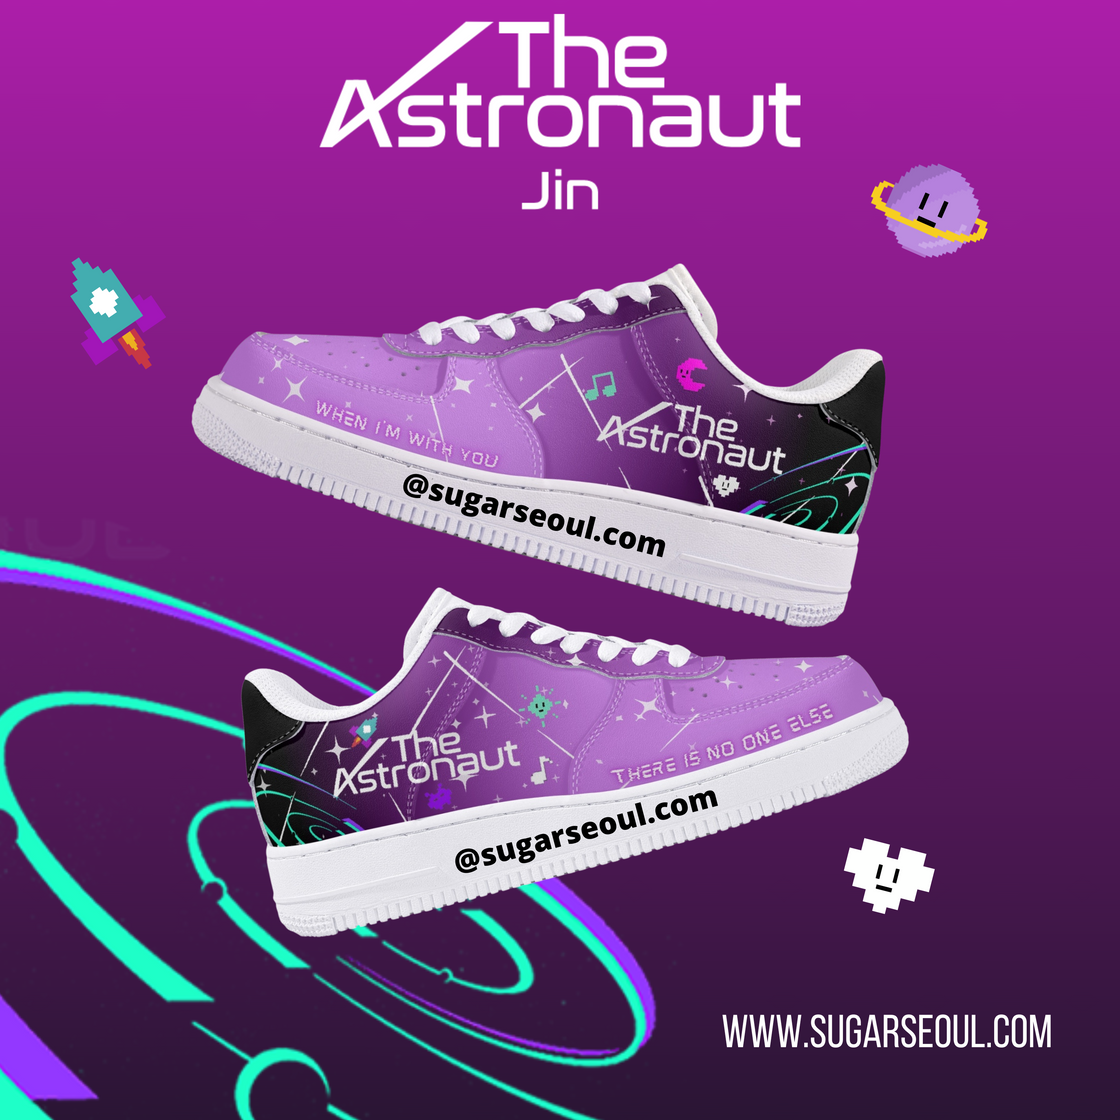 The Astronaut-Jin